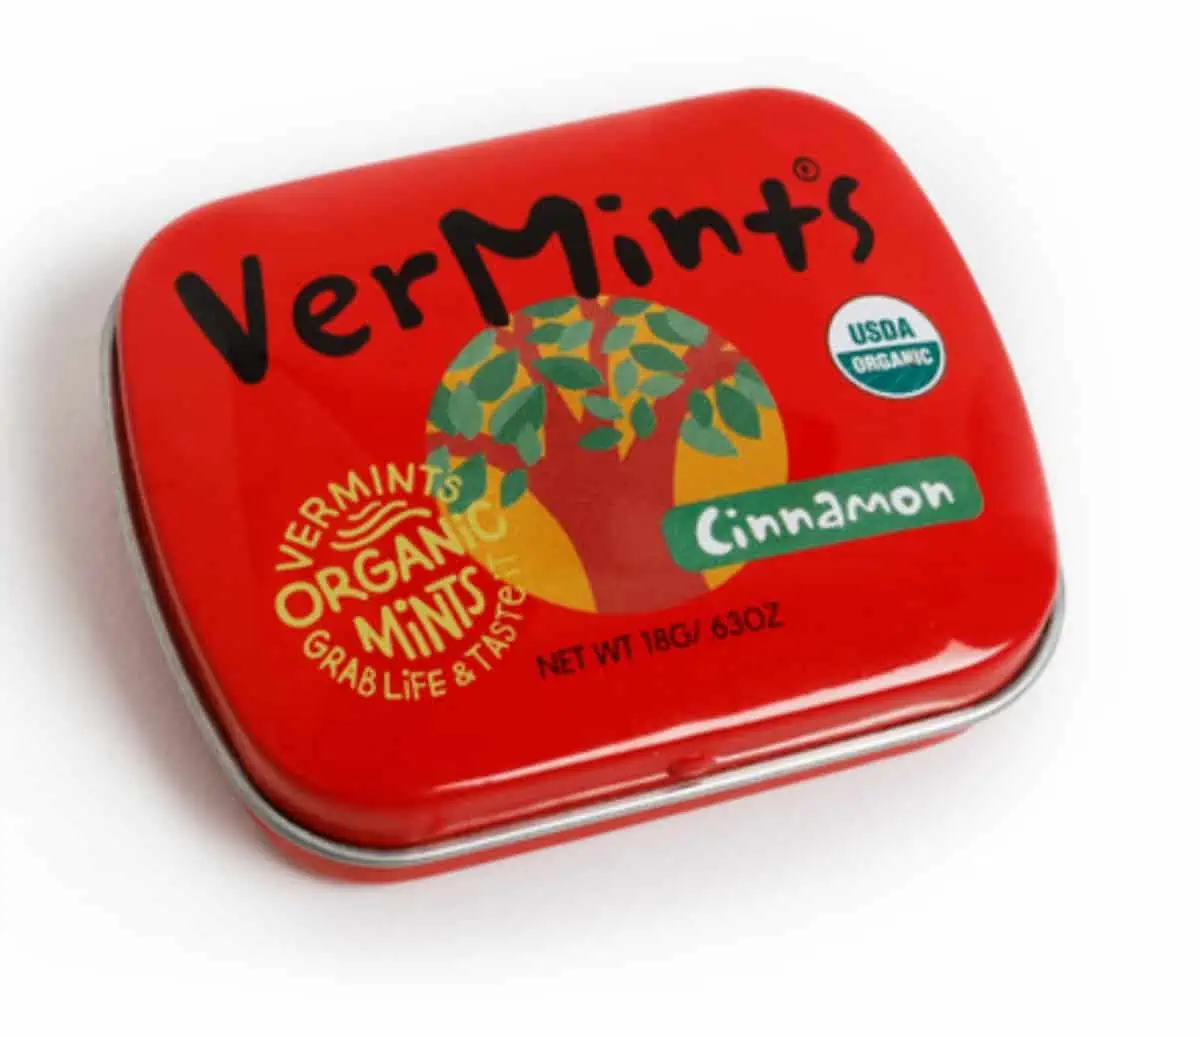 A tin of cinnamon VerMints.